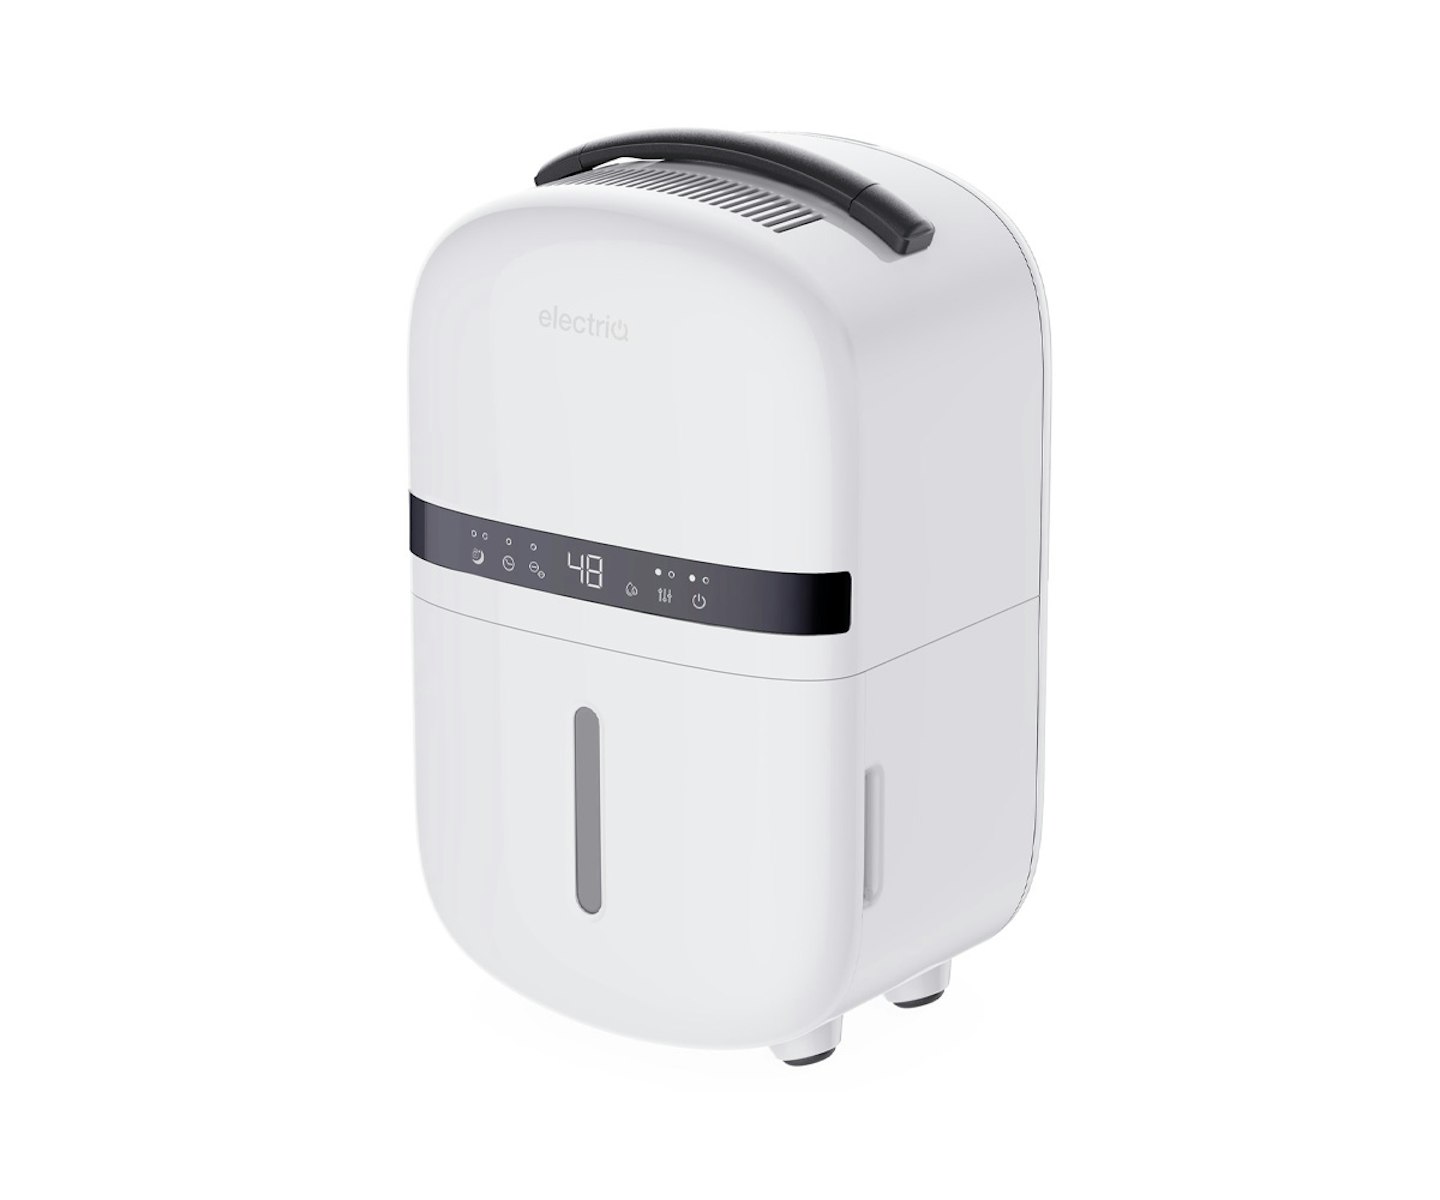 electriQ 5L Quiet Compact Compressor Dehumidifier and Air Purifier - White